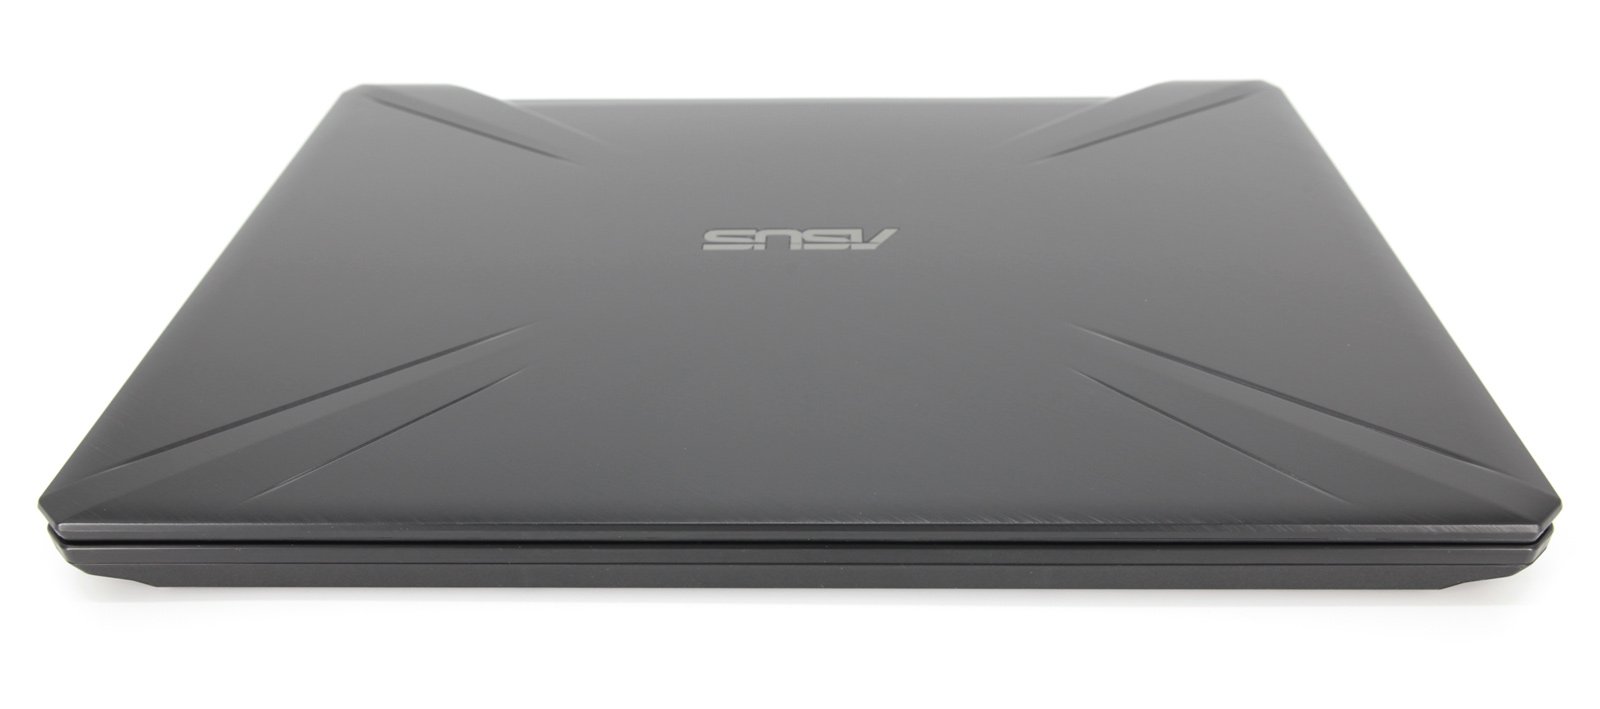 ASUS FX505DV Gaming Laptop: 15.6 RTX 2060 Ryzen 7 3750H, 16GB RAM, 512GB SSD - CruiseTech